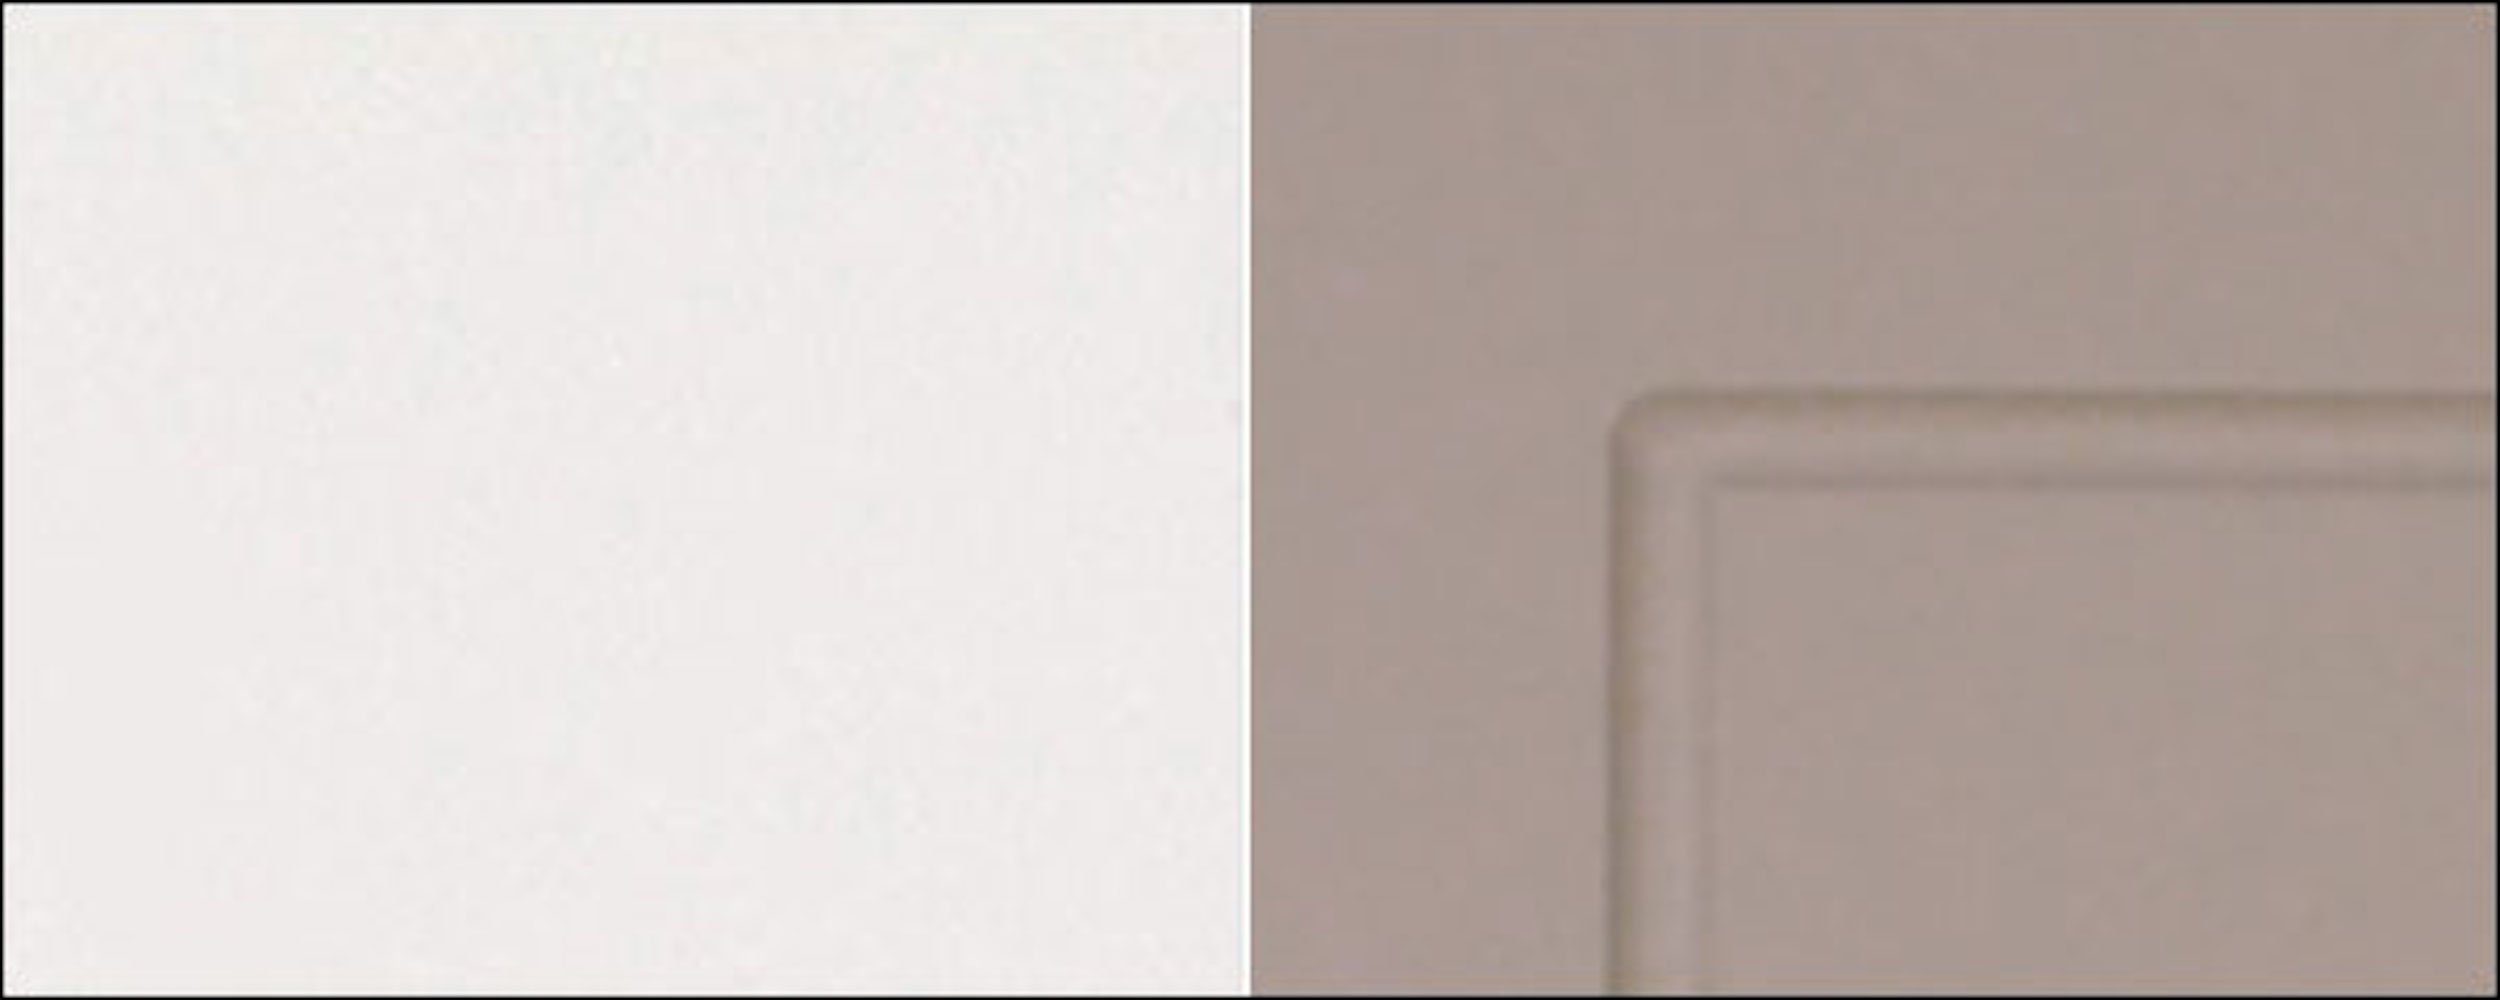 1-türig wählbar Klapphängeschrank matt Korpusfarbe (Kvantum) beige Front- Kvantum Feldmann-Wohnen 50cm und